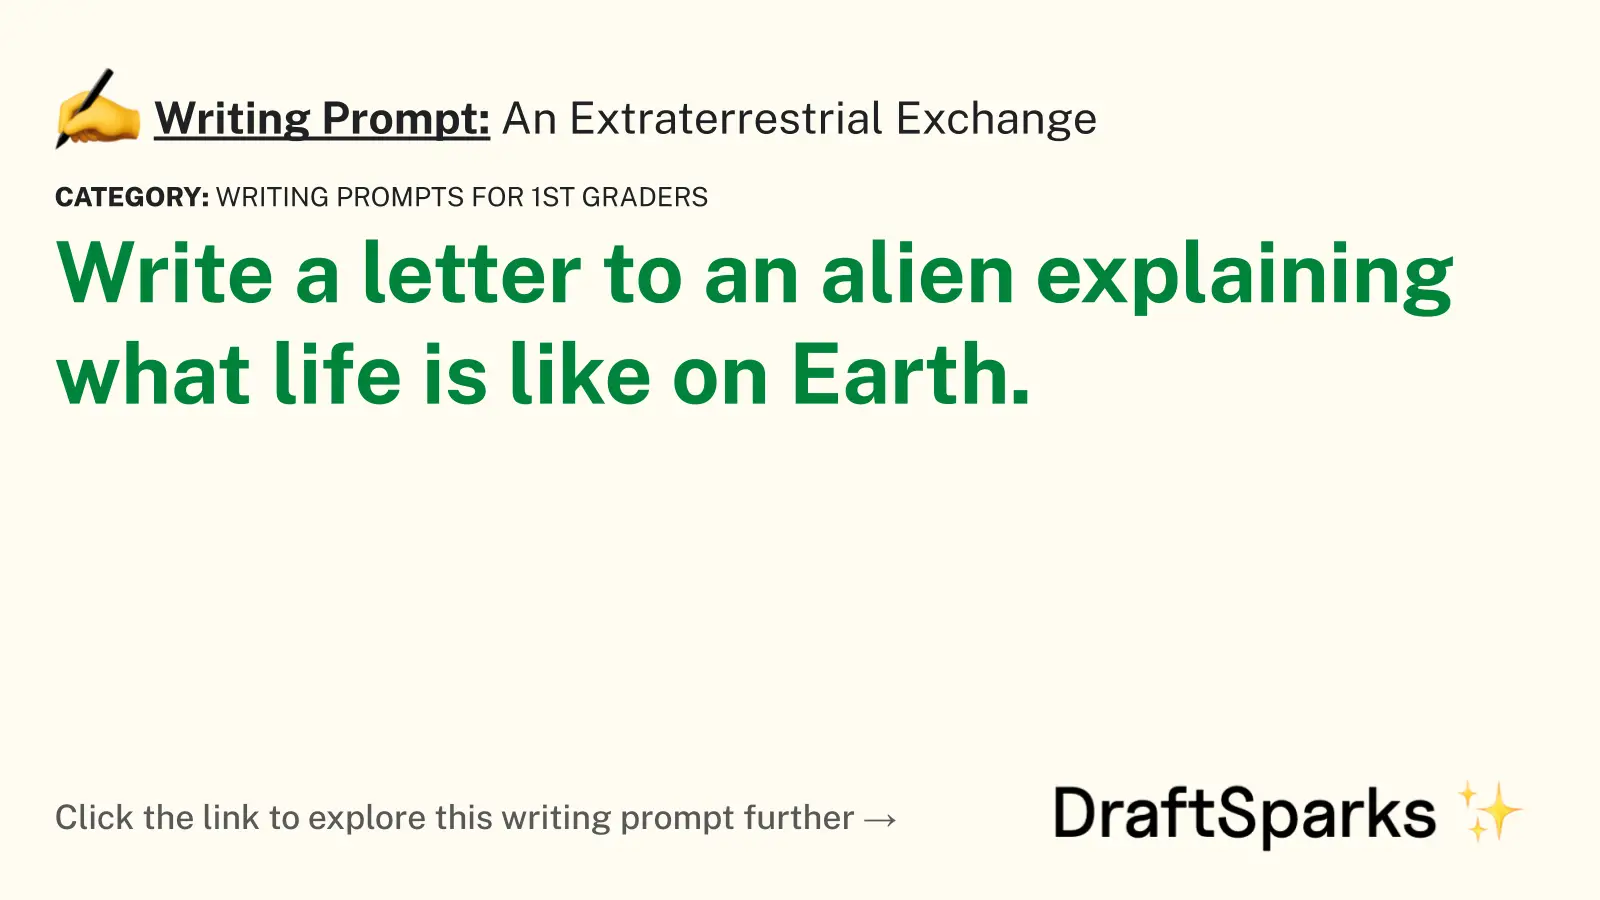 An Extraterrestrial Exchange